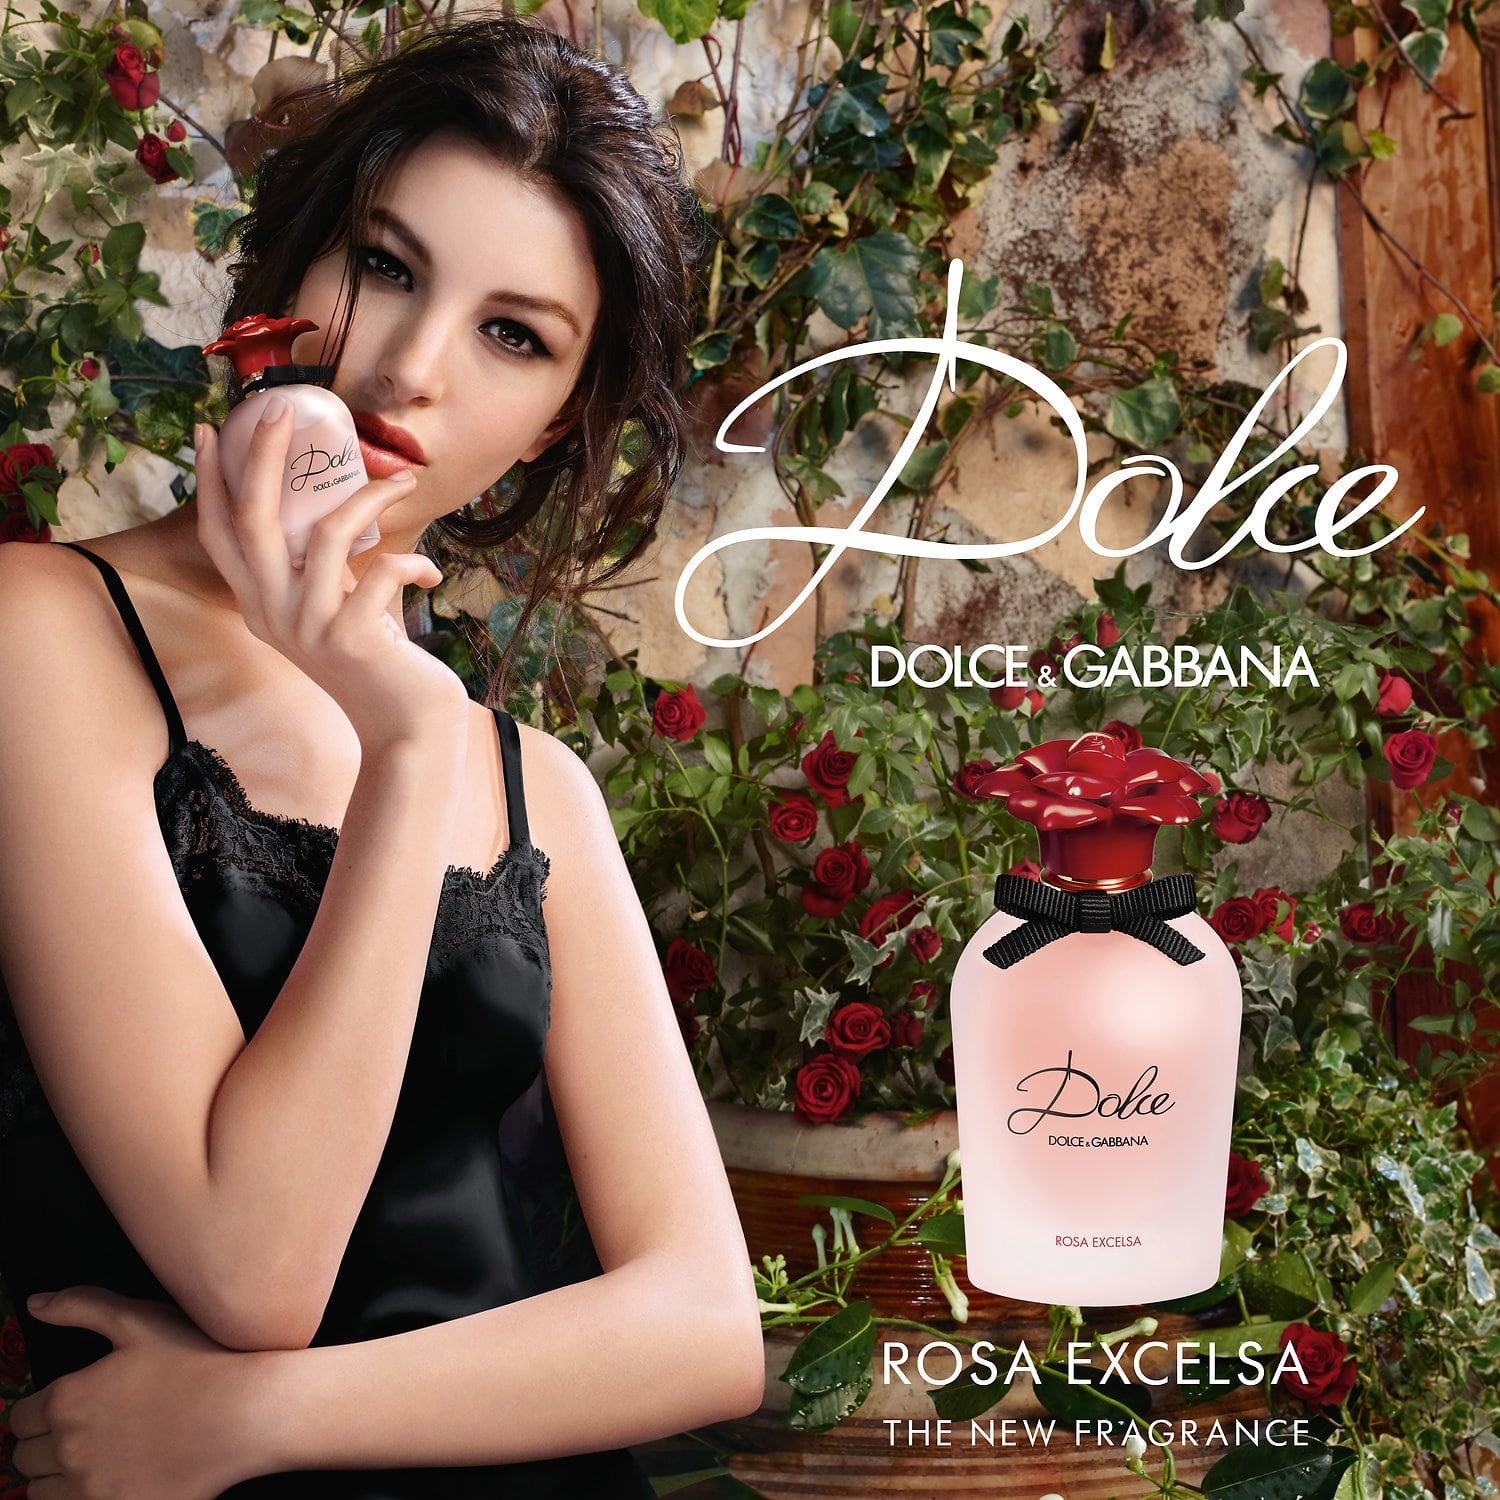 Dolce & Gabbana, Dolce & Gabbana Rosa Excelsa, Dolce & Gabbana Rosa Excelsa Eau De Parfum, Dolce & Gabbana Rosa Excelsa EDP, Dolce Rosa Excelsa, ดอเช่ โรซ่า เอ็กเซลซ่า, ดอลเช่ แอนด์ กาบาน่า, น้ำหอม Dolce & Gabbana, น้ำหอมกลิ่นหุหลาบ